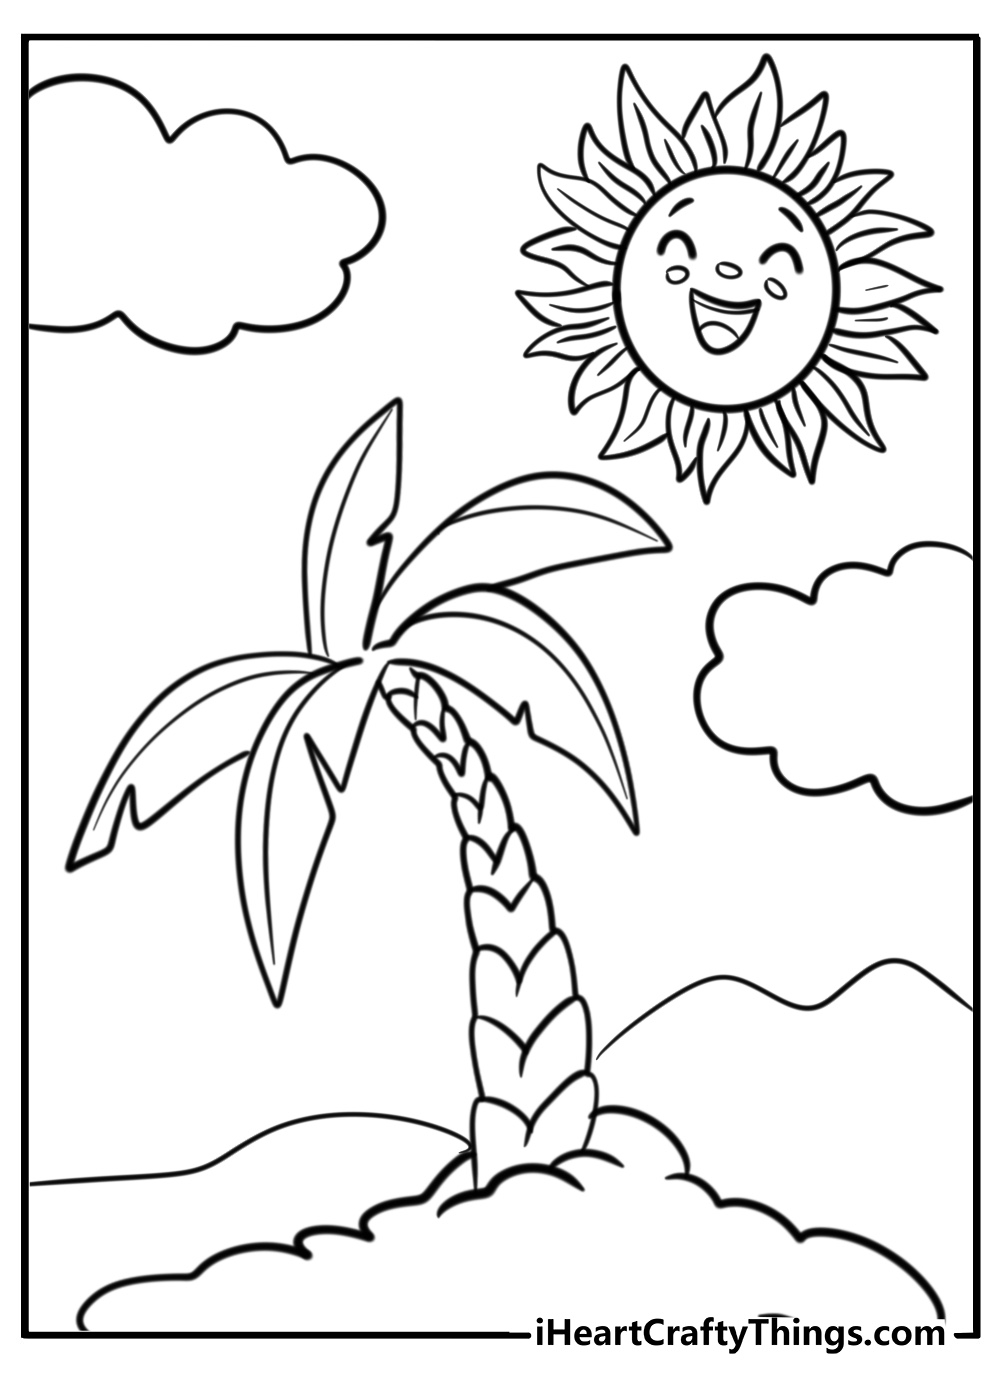 One palm tree and a cartoon sun